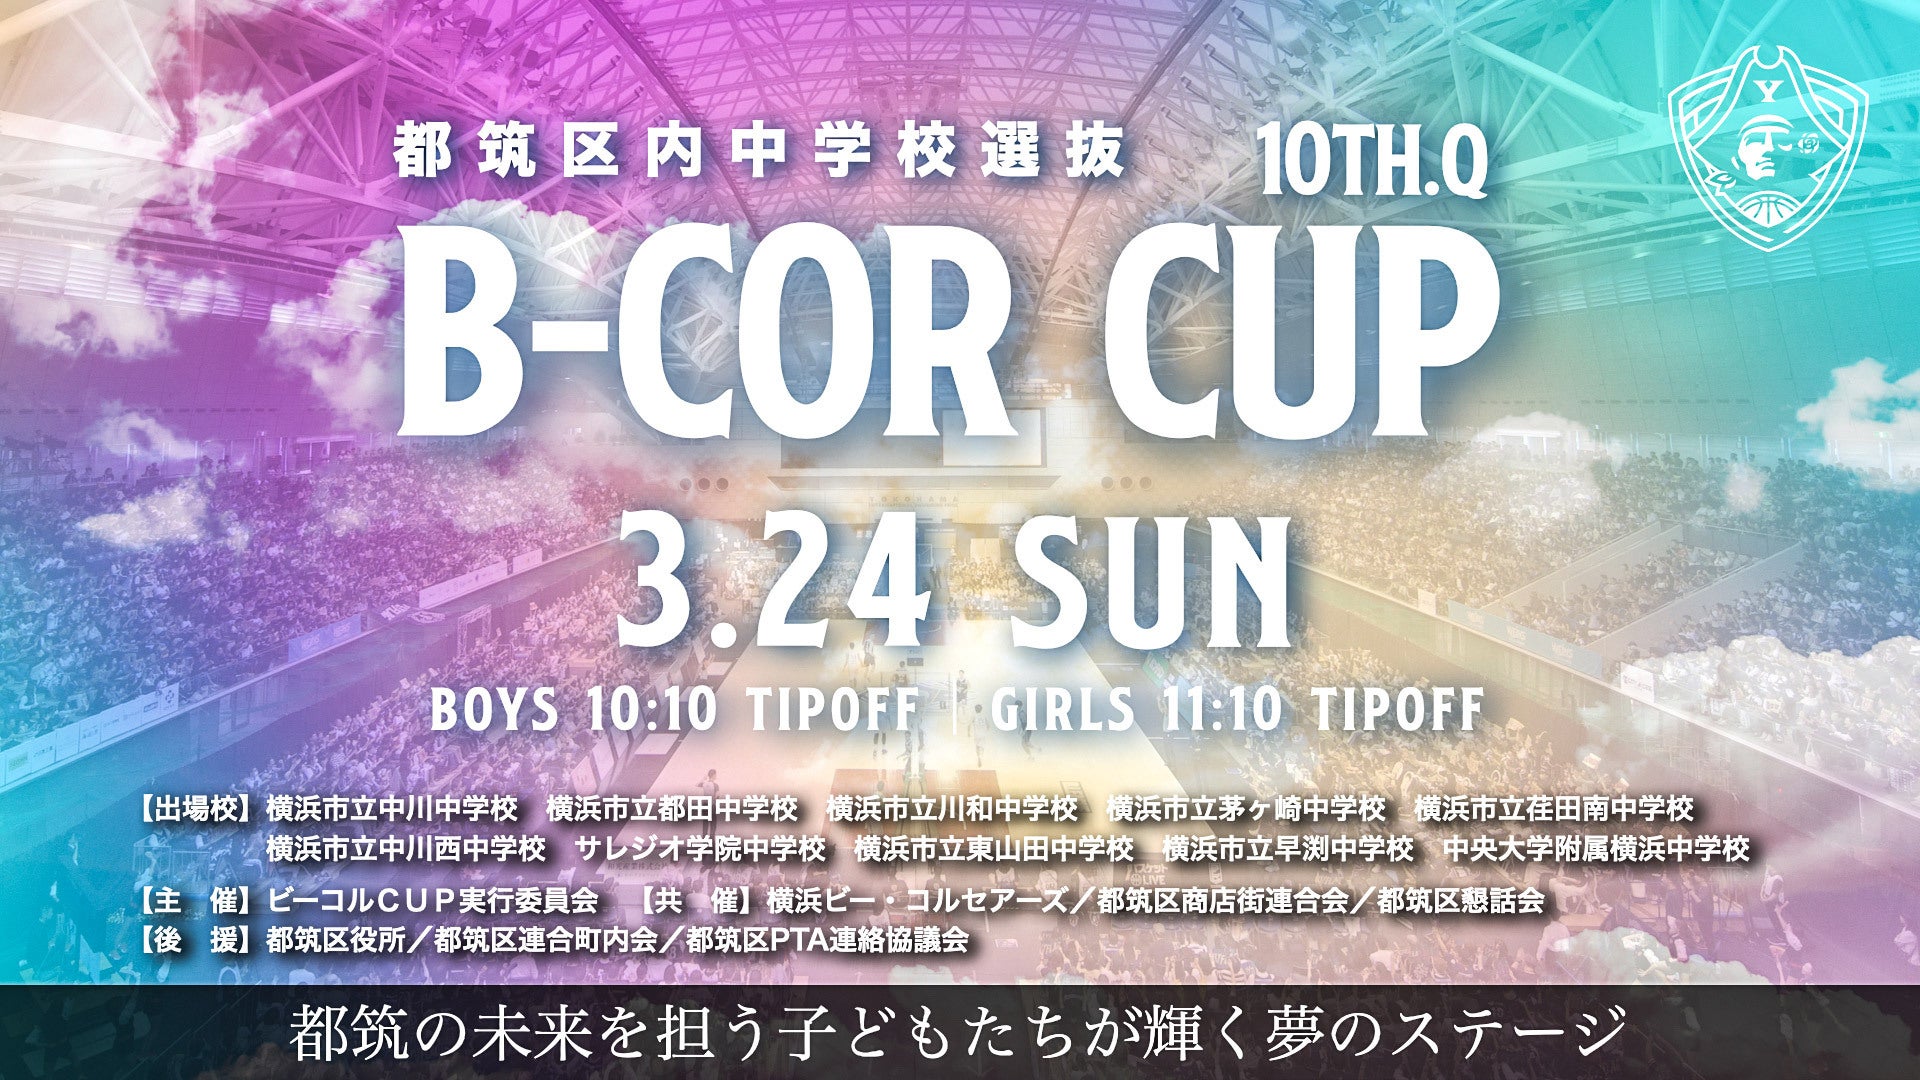 「B-COR CUP」